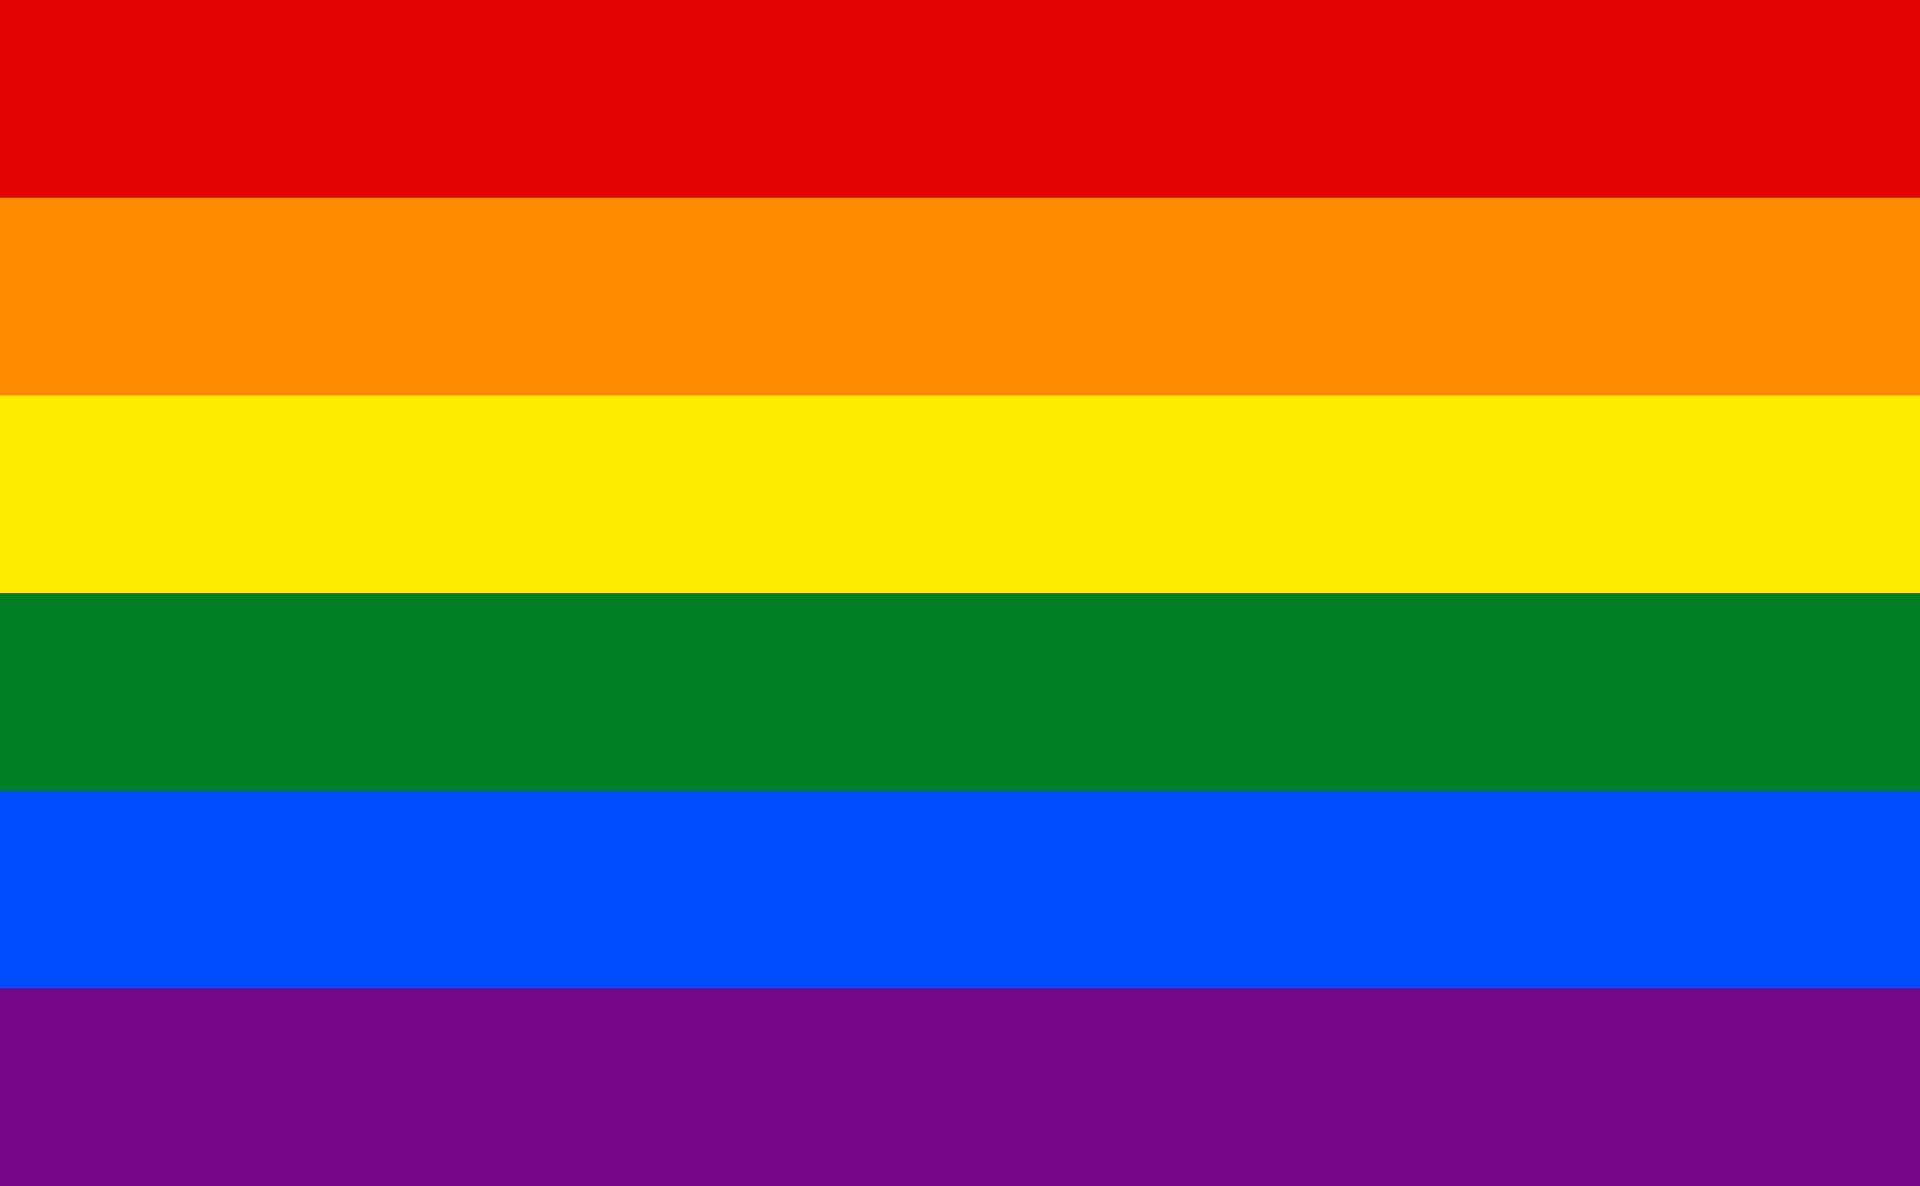 Gay pride flag.